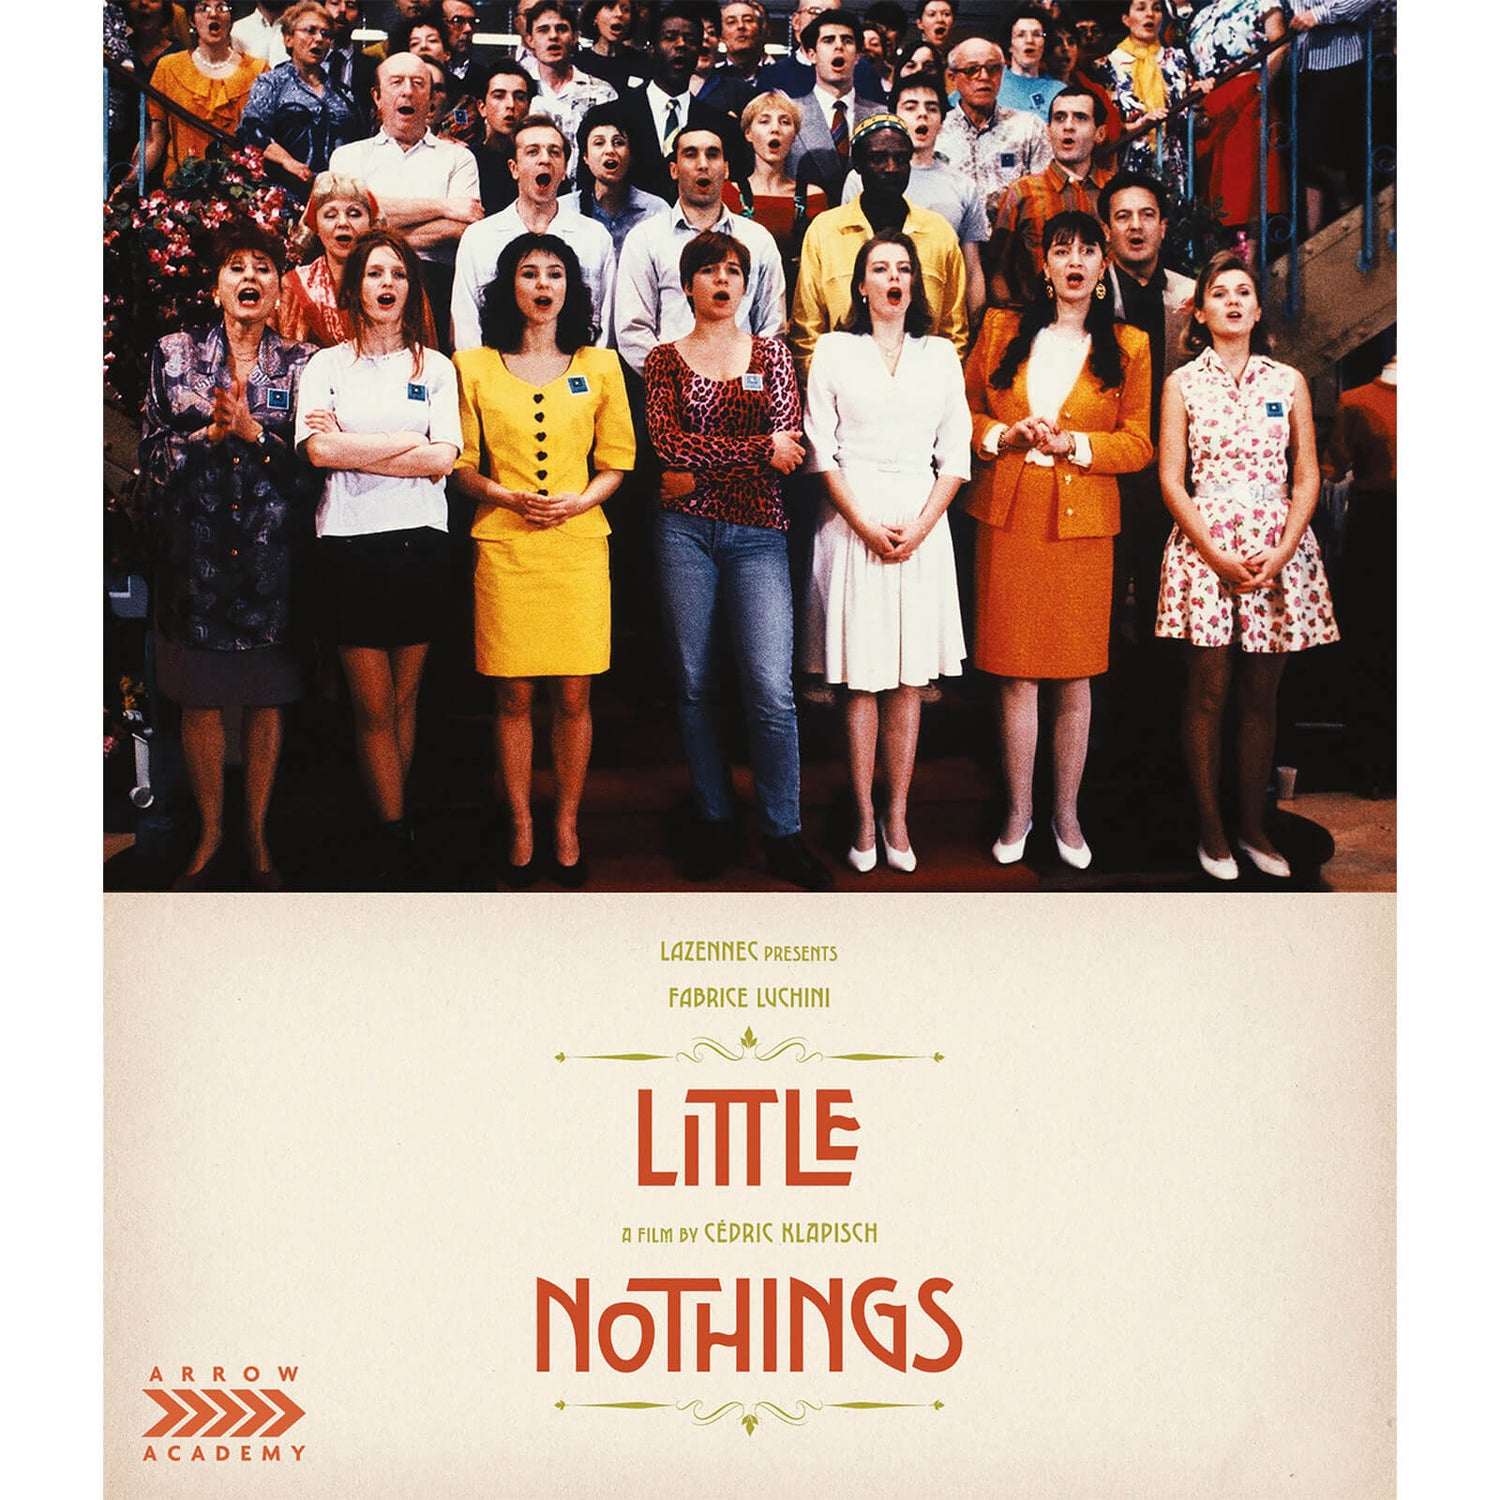 Little Nothings